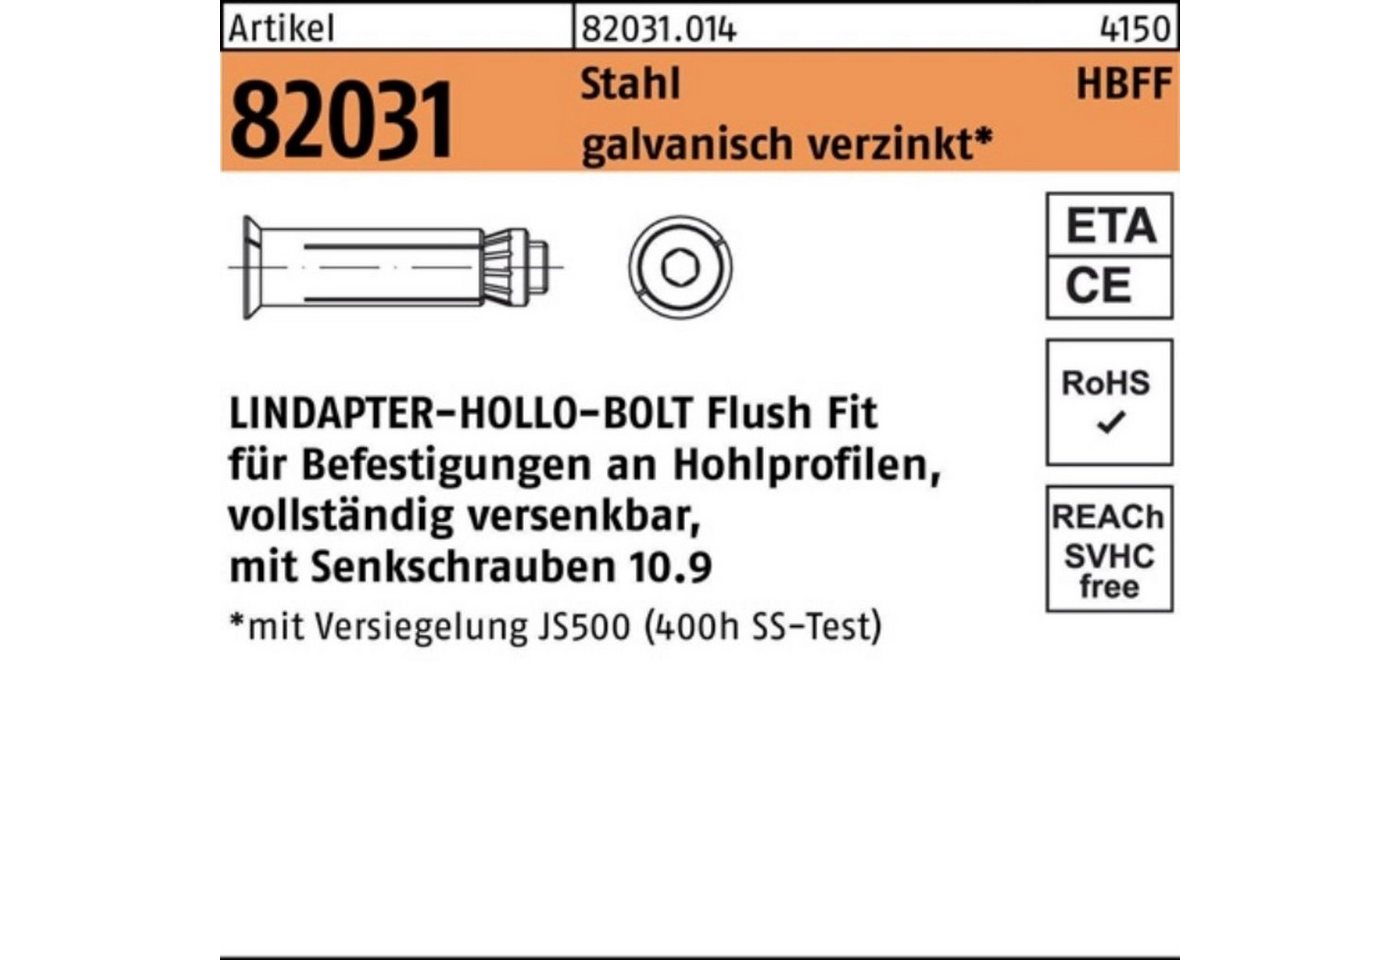 Lindapter Hohlraumdübel 100er Pack Hohlraumdübel R 82031 HBFF 12-3 (100/74) 10.9 galv.verz. 1 von Lindapter